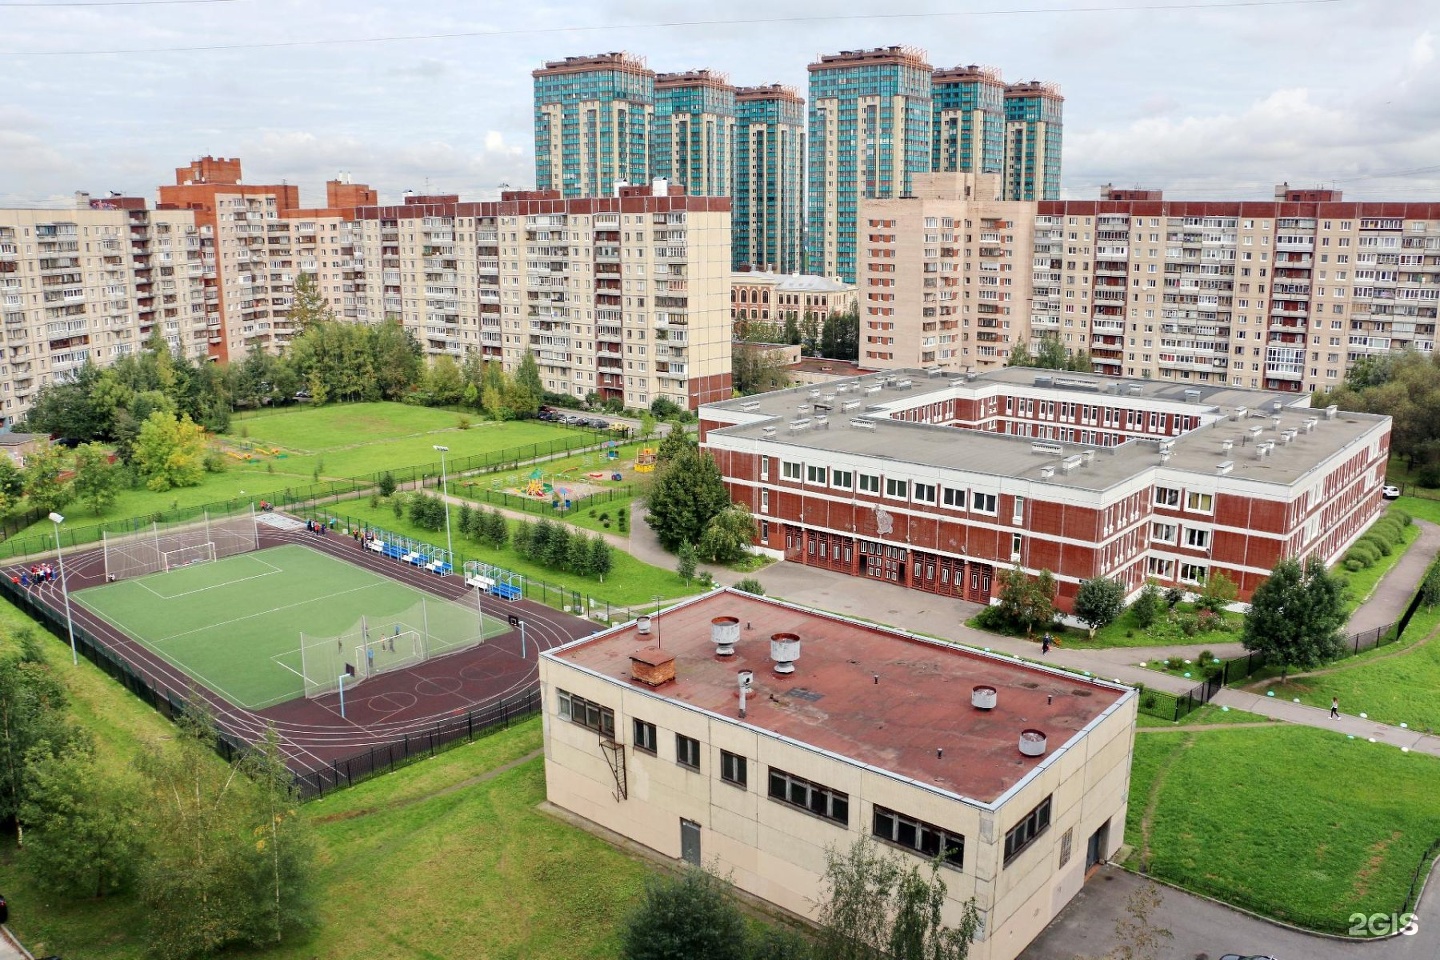 школа 583 приморского района санкт петербурга